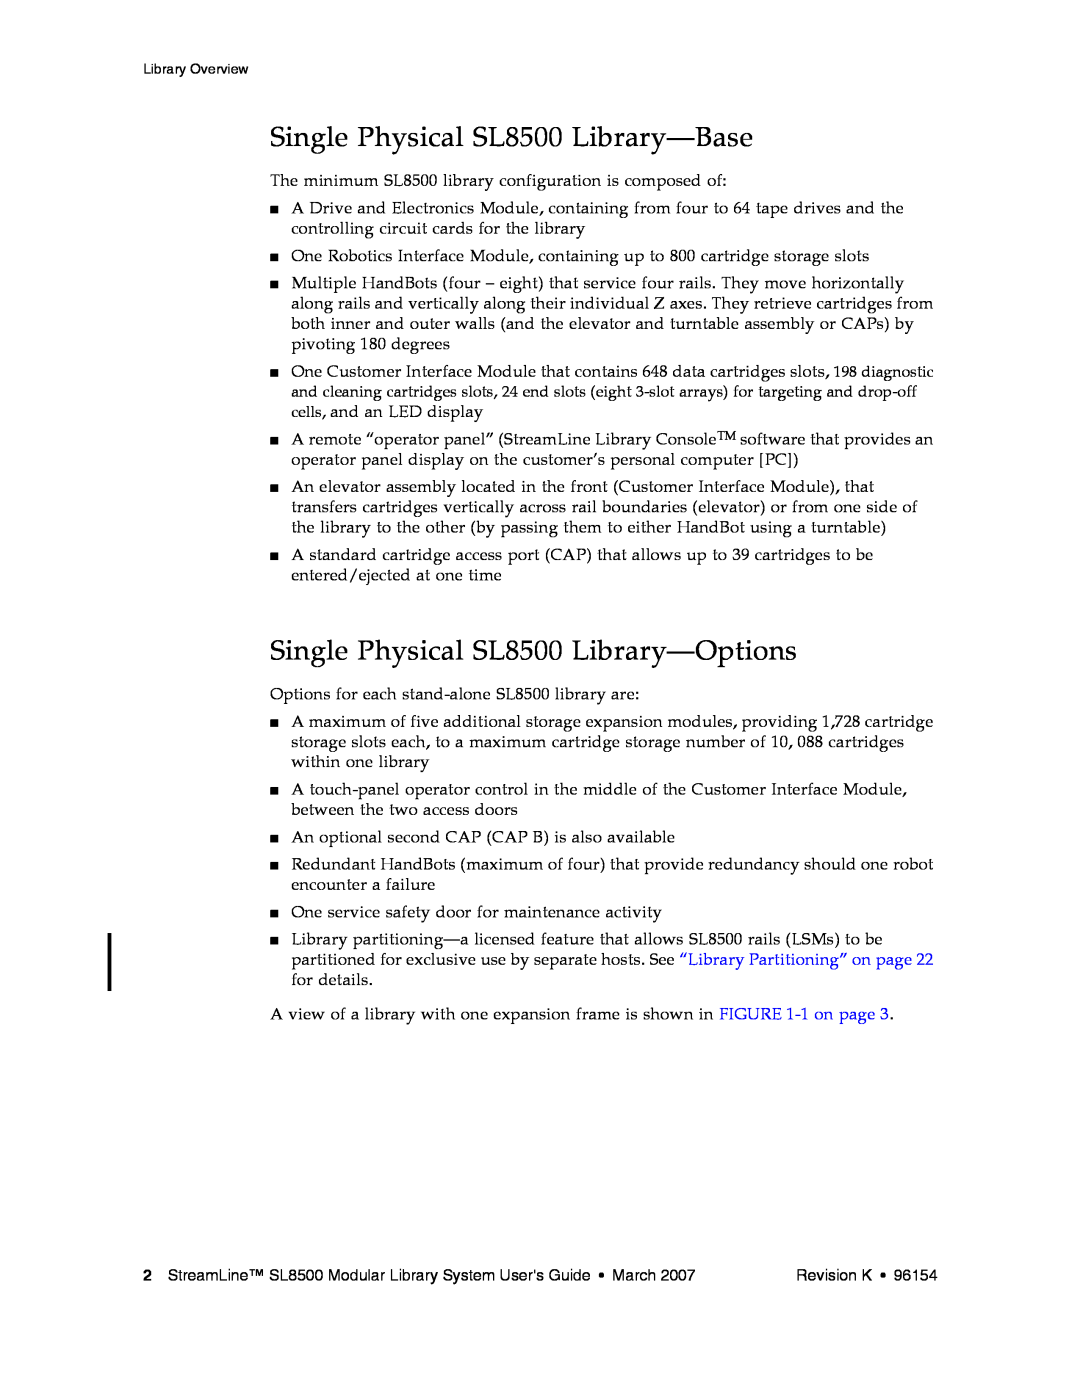 Sun Microsystems manual Single Physical SL8500 Library-Base, Single Physical SL8500 Library-Options 